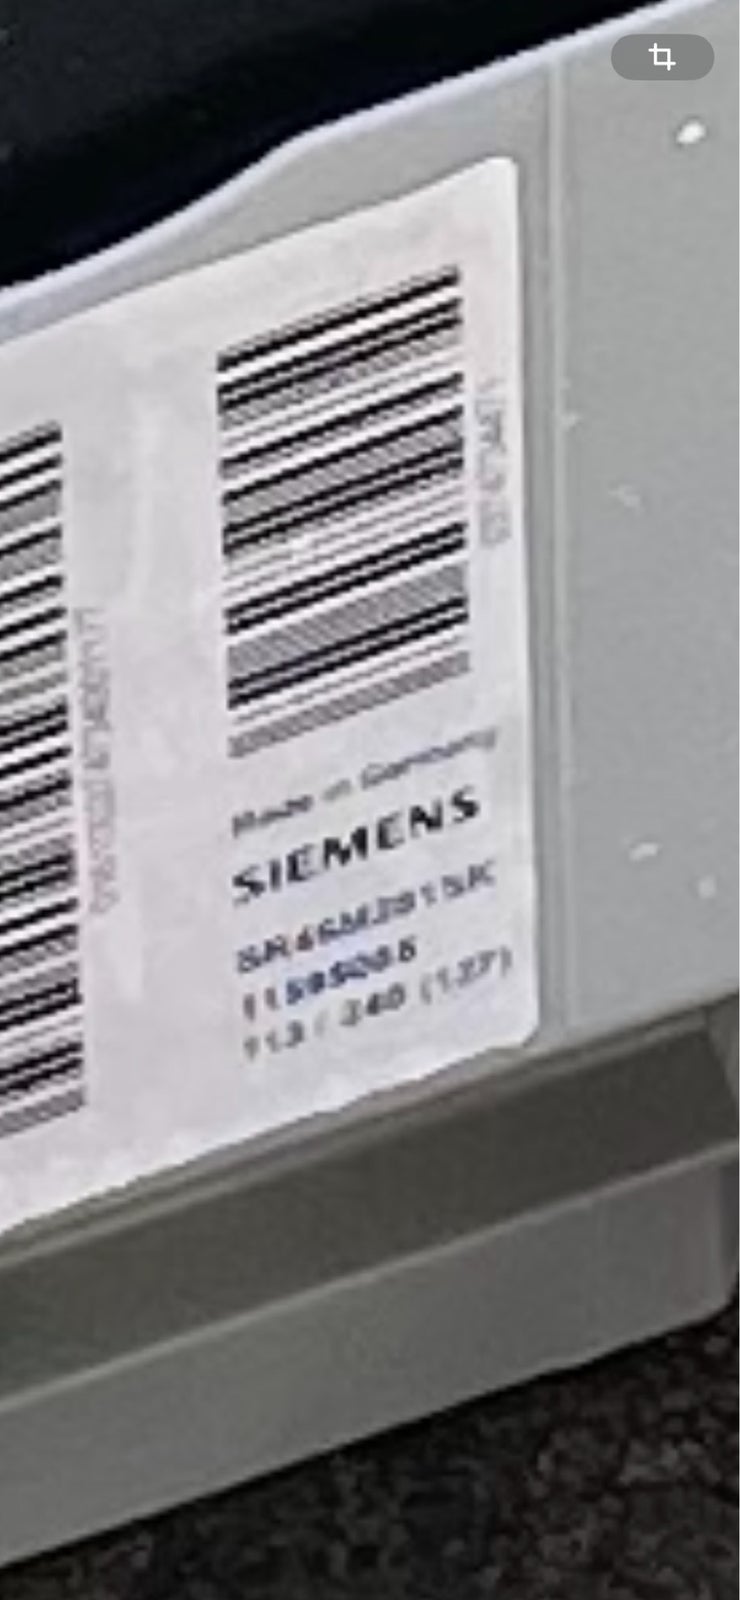 Siemens, b: 45